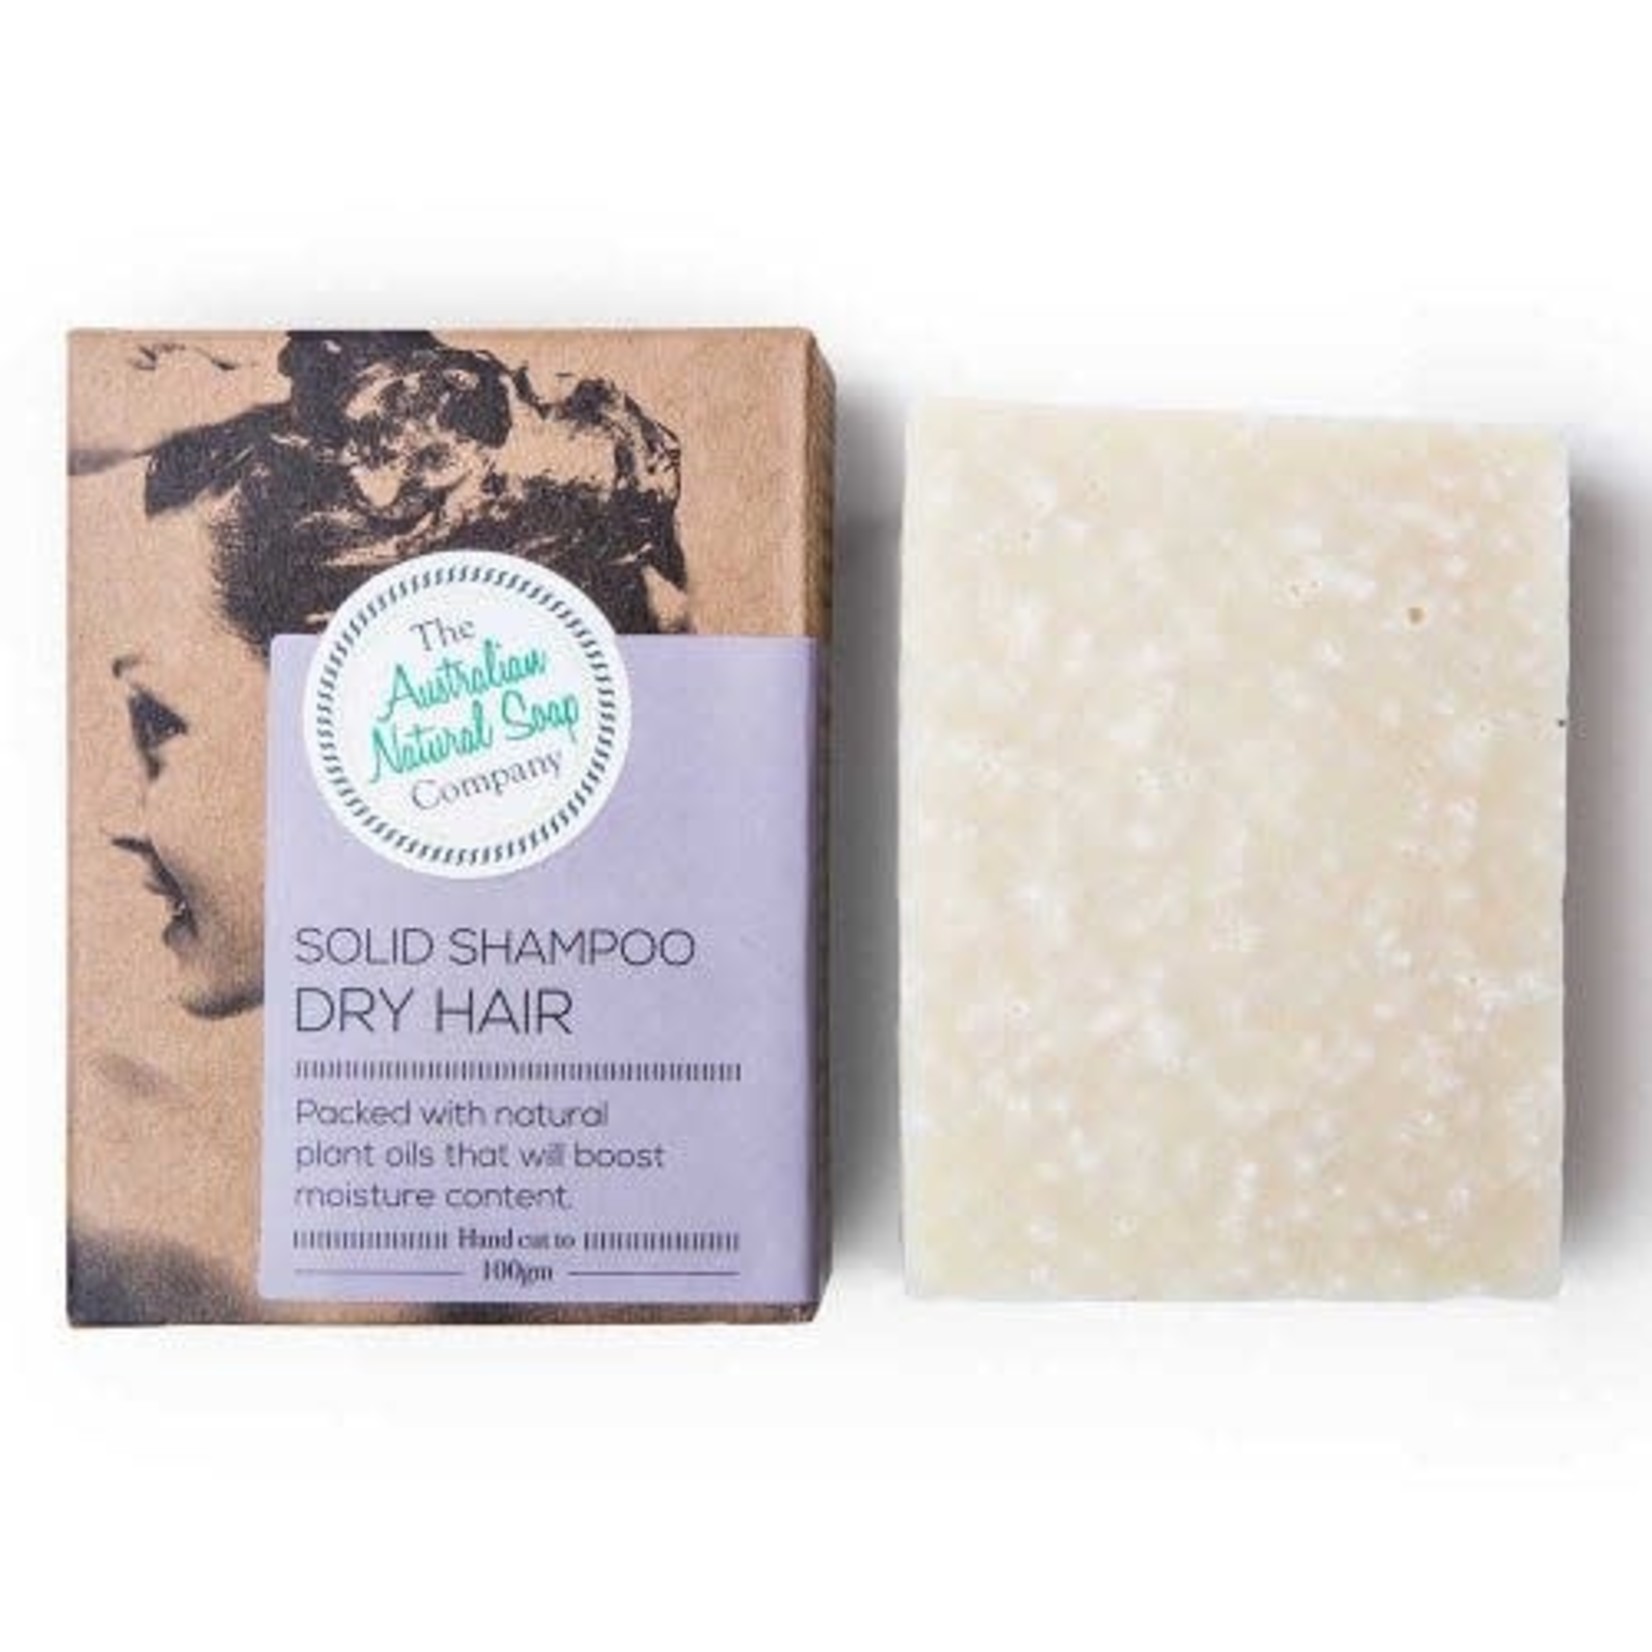 The Australian Natural Soap Company The Australian Natural Soap Company Shampoo Bar Dry Hair